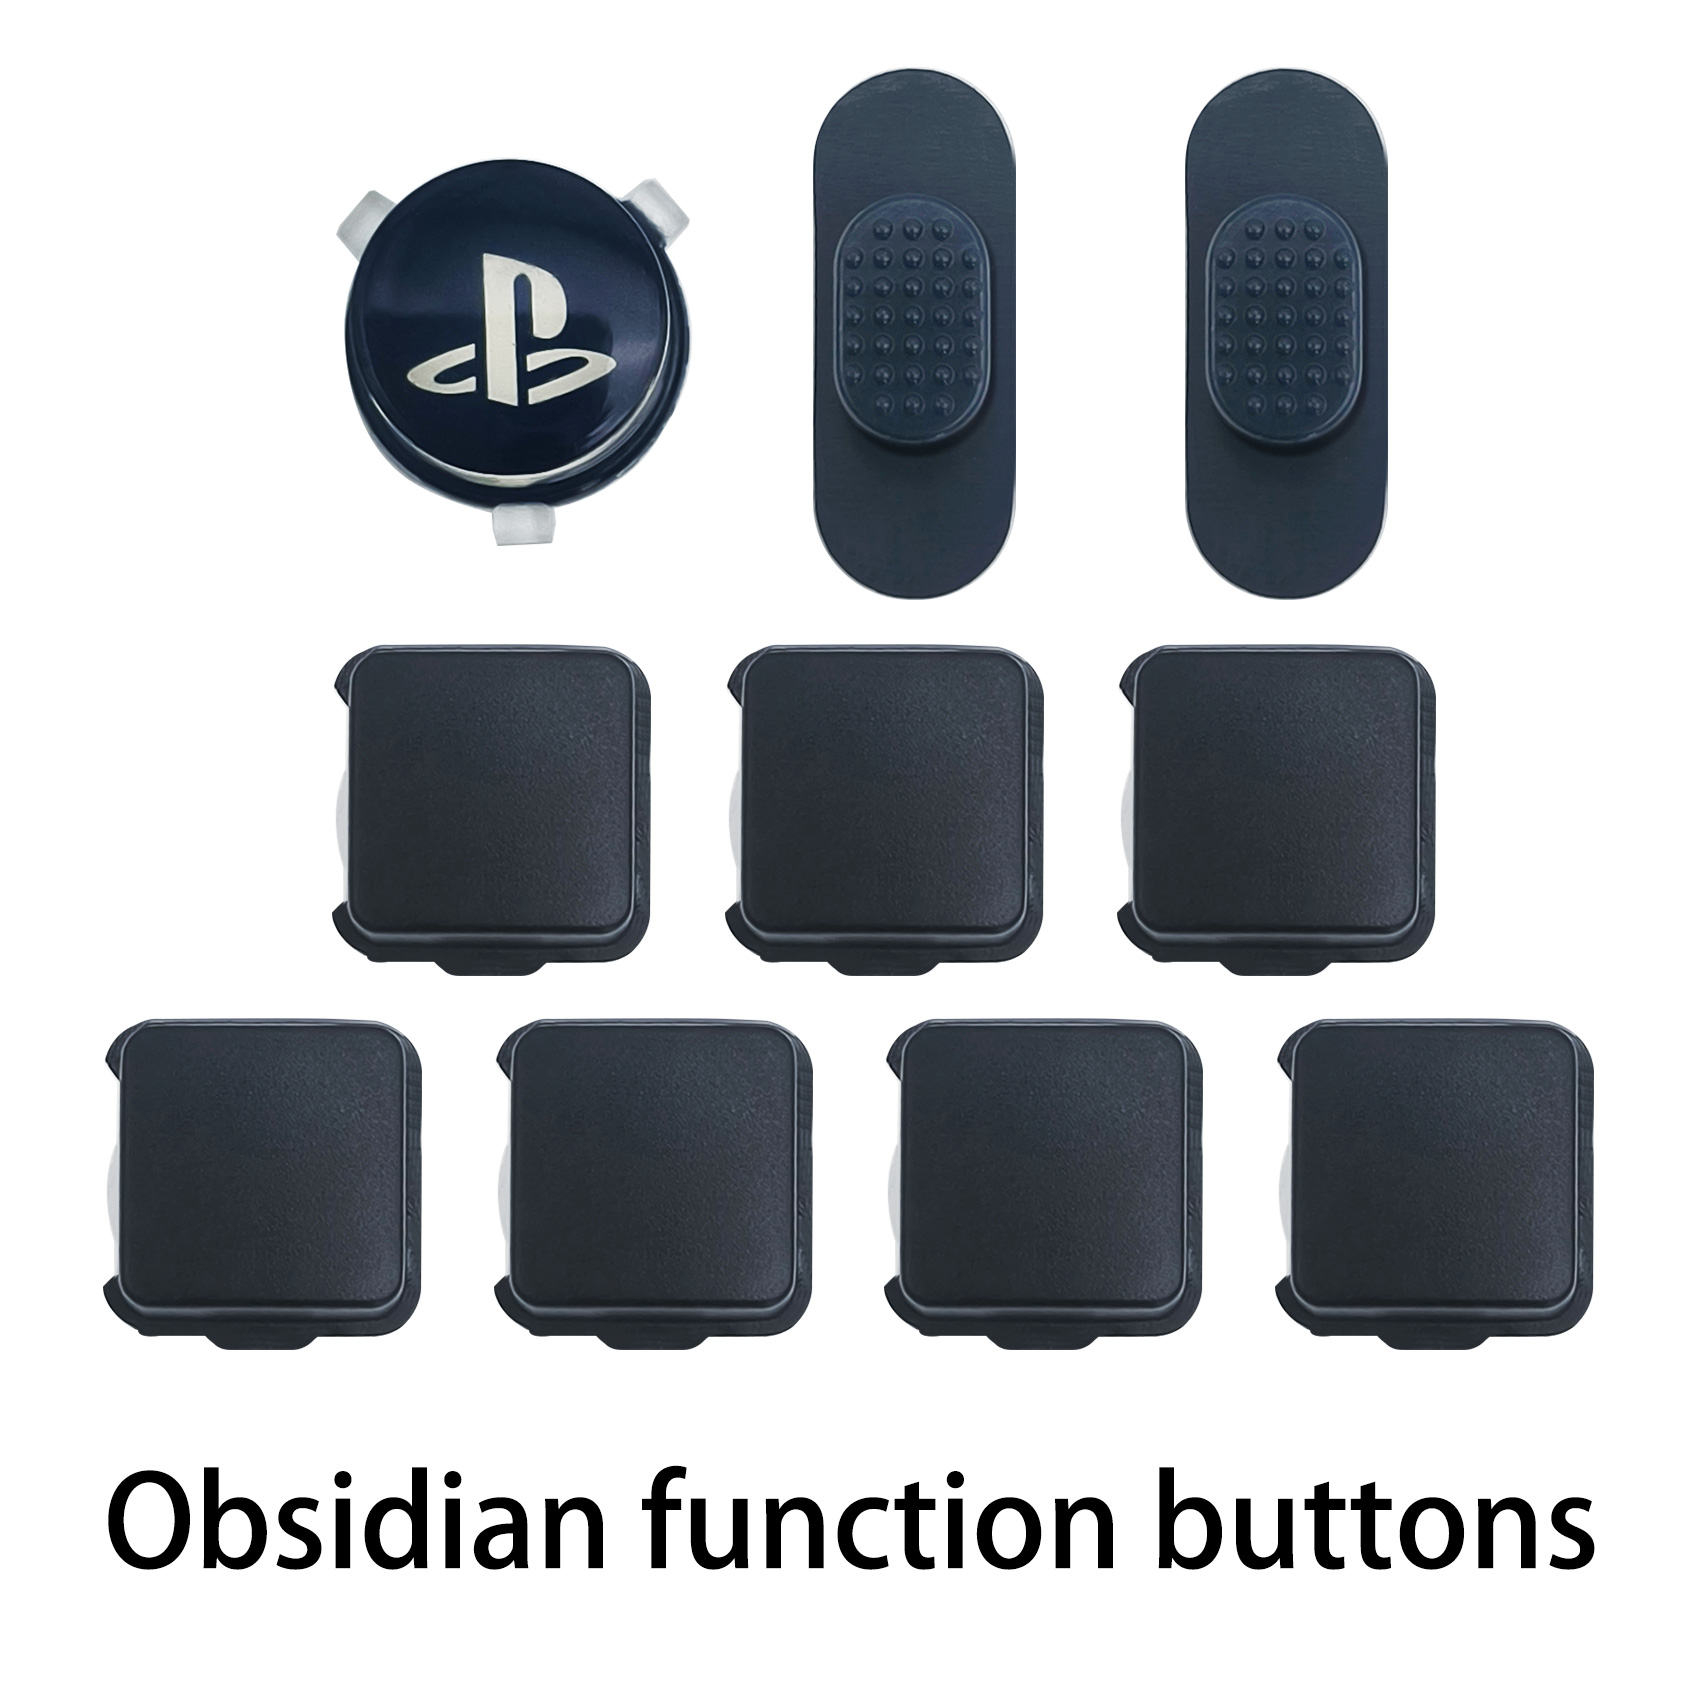 Q3 Obsidian/Pearl Arcade Joystick Repair Accessories